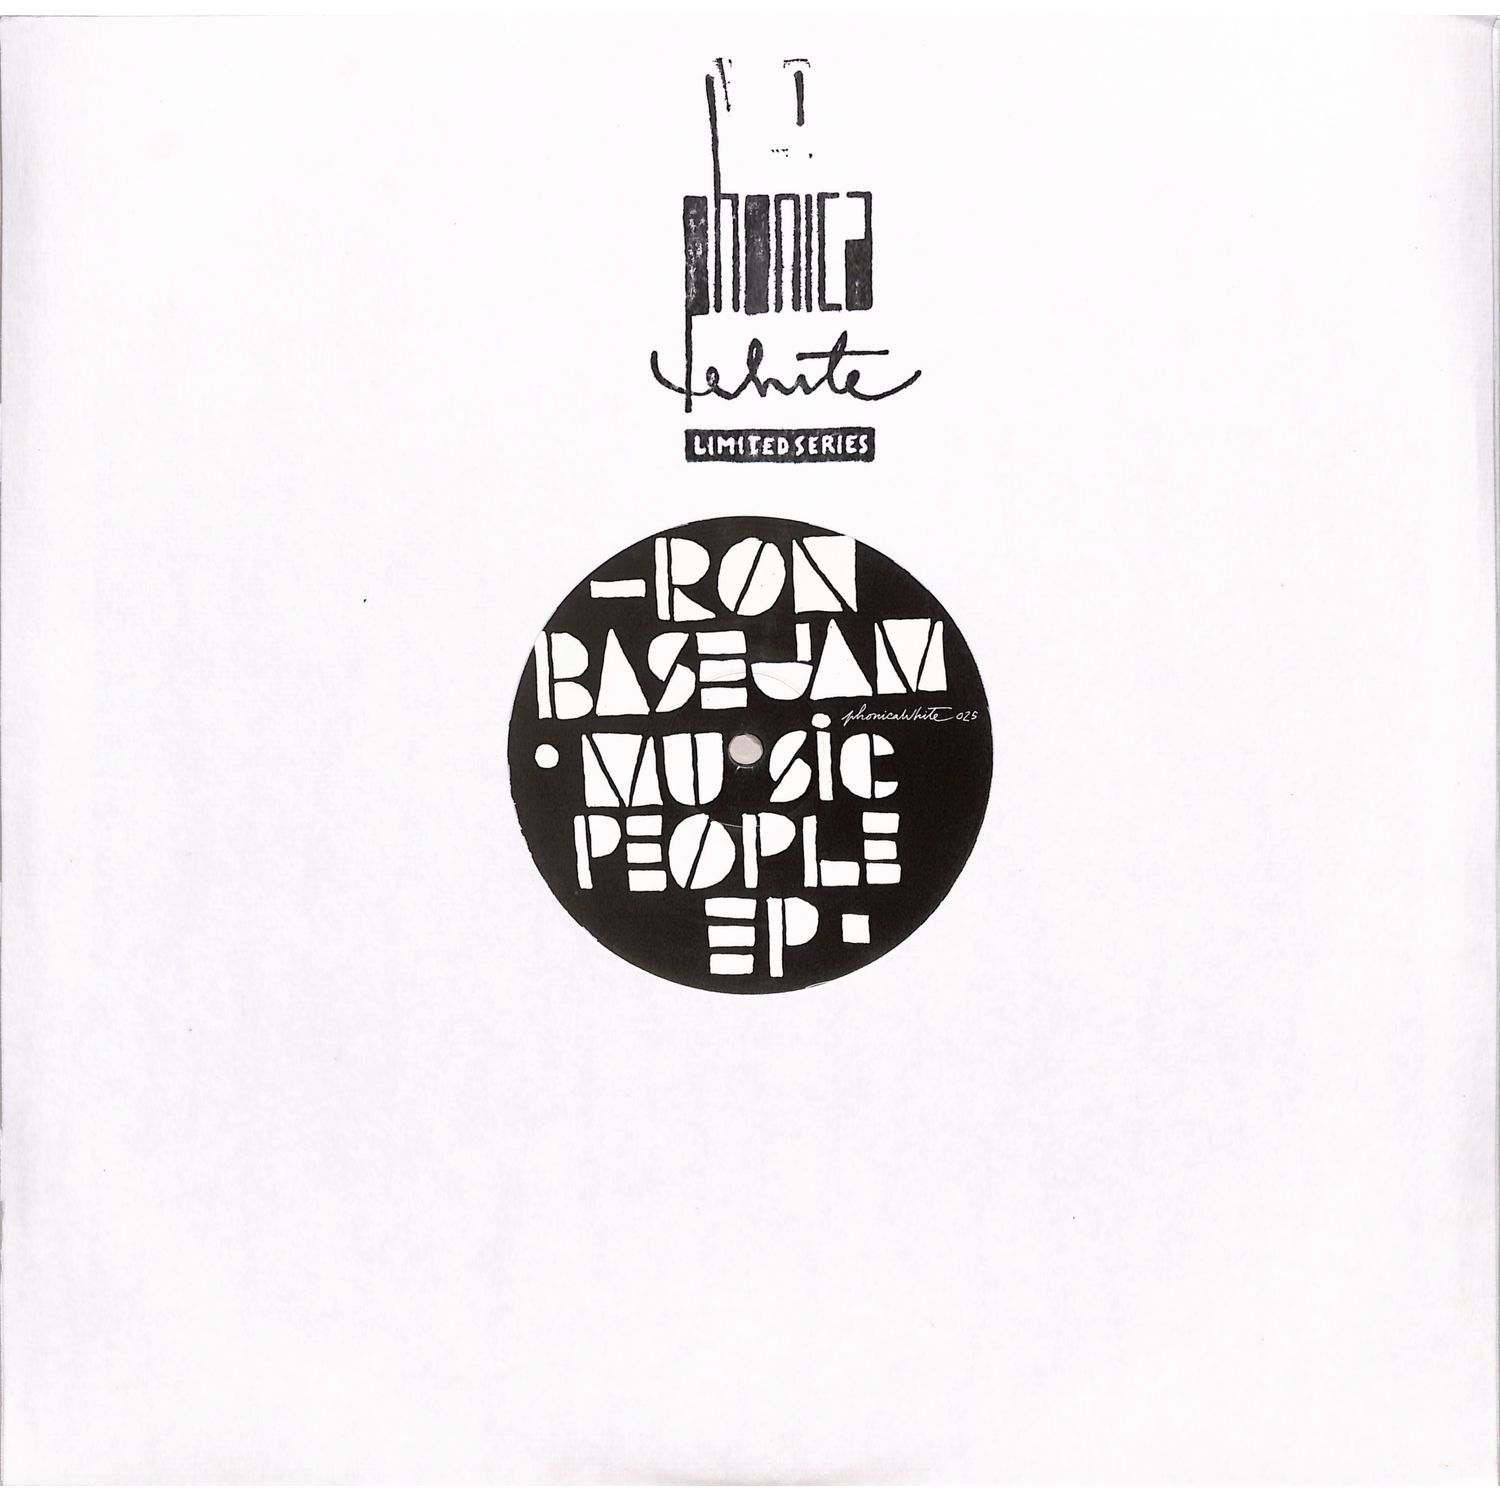 Ron Basejam - MUSIC PEOPLE EP